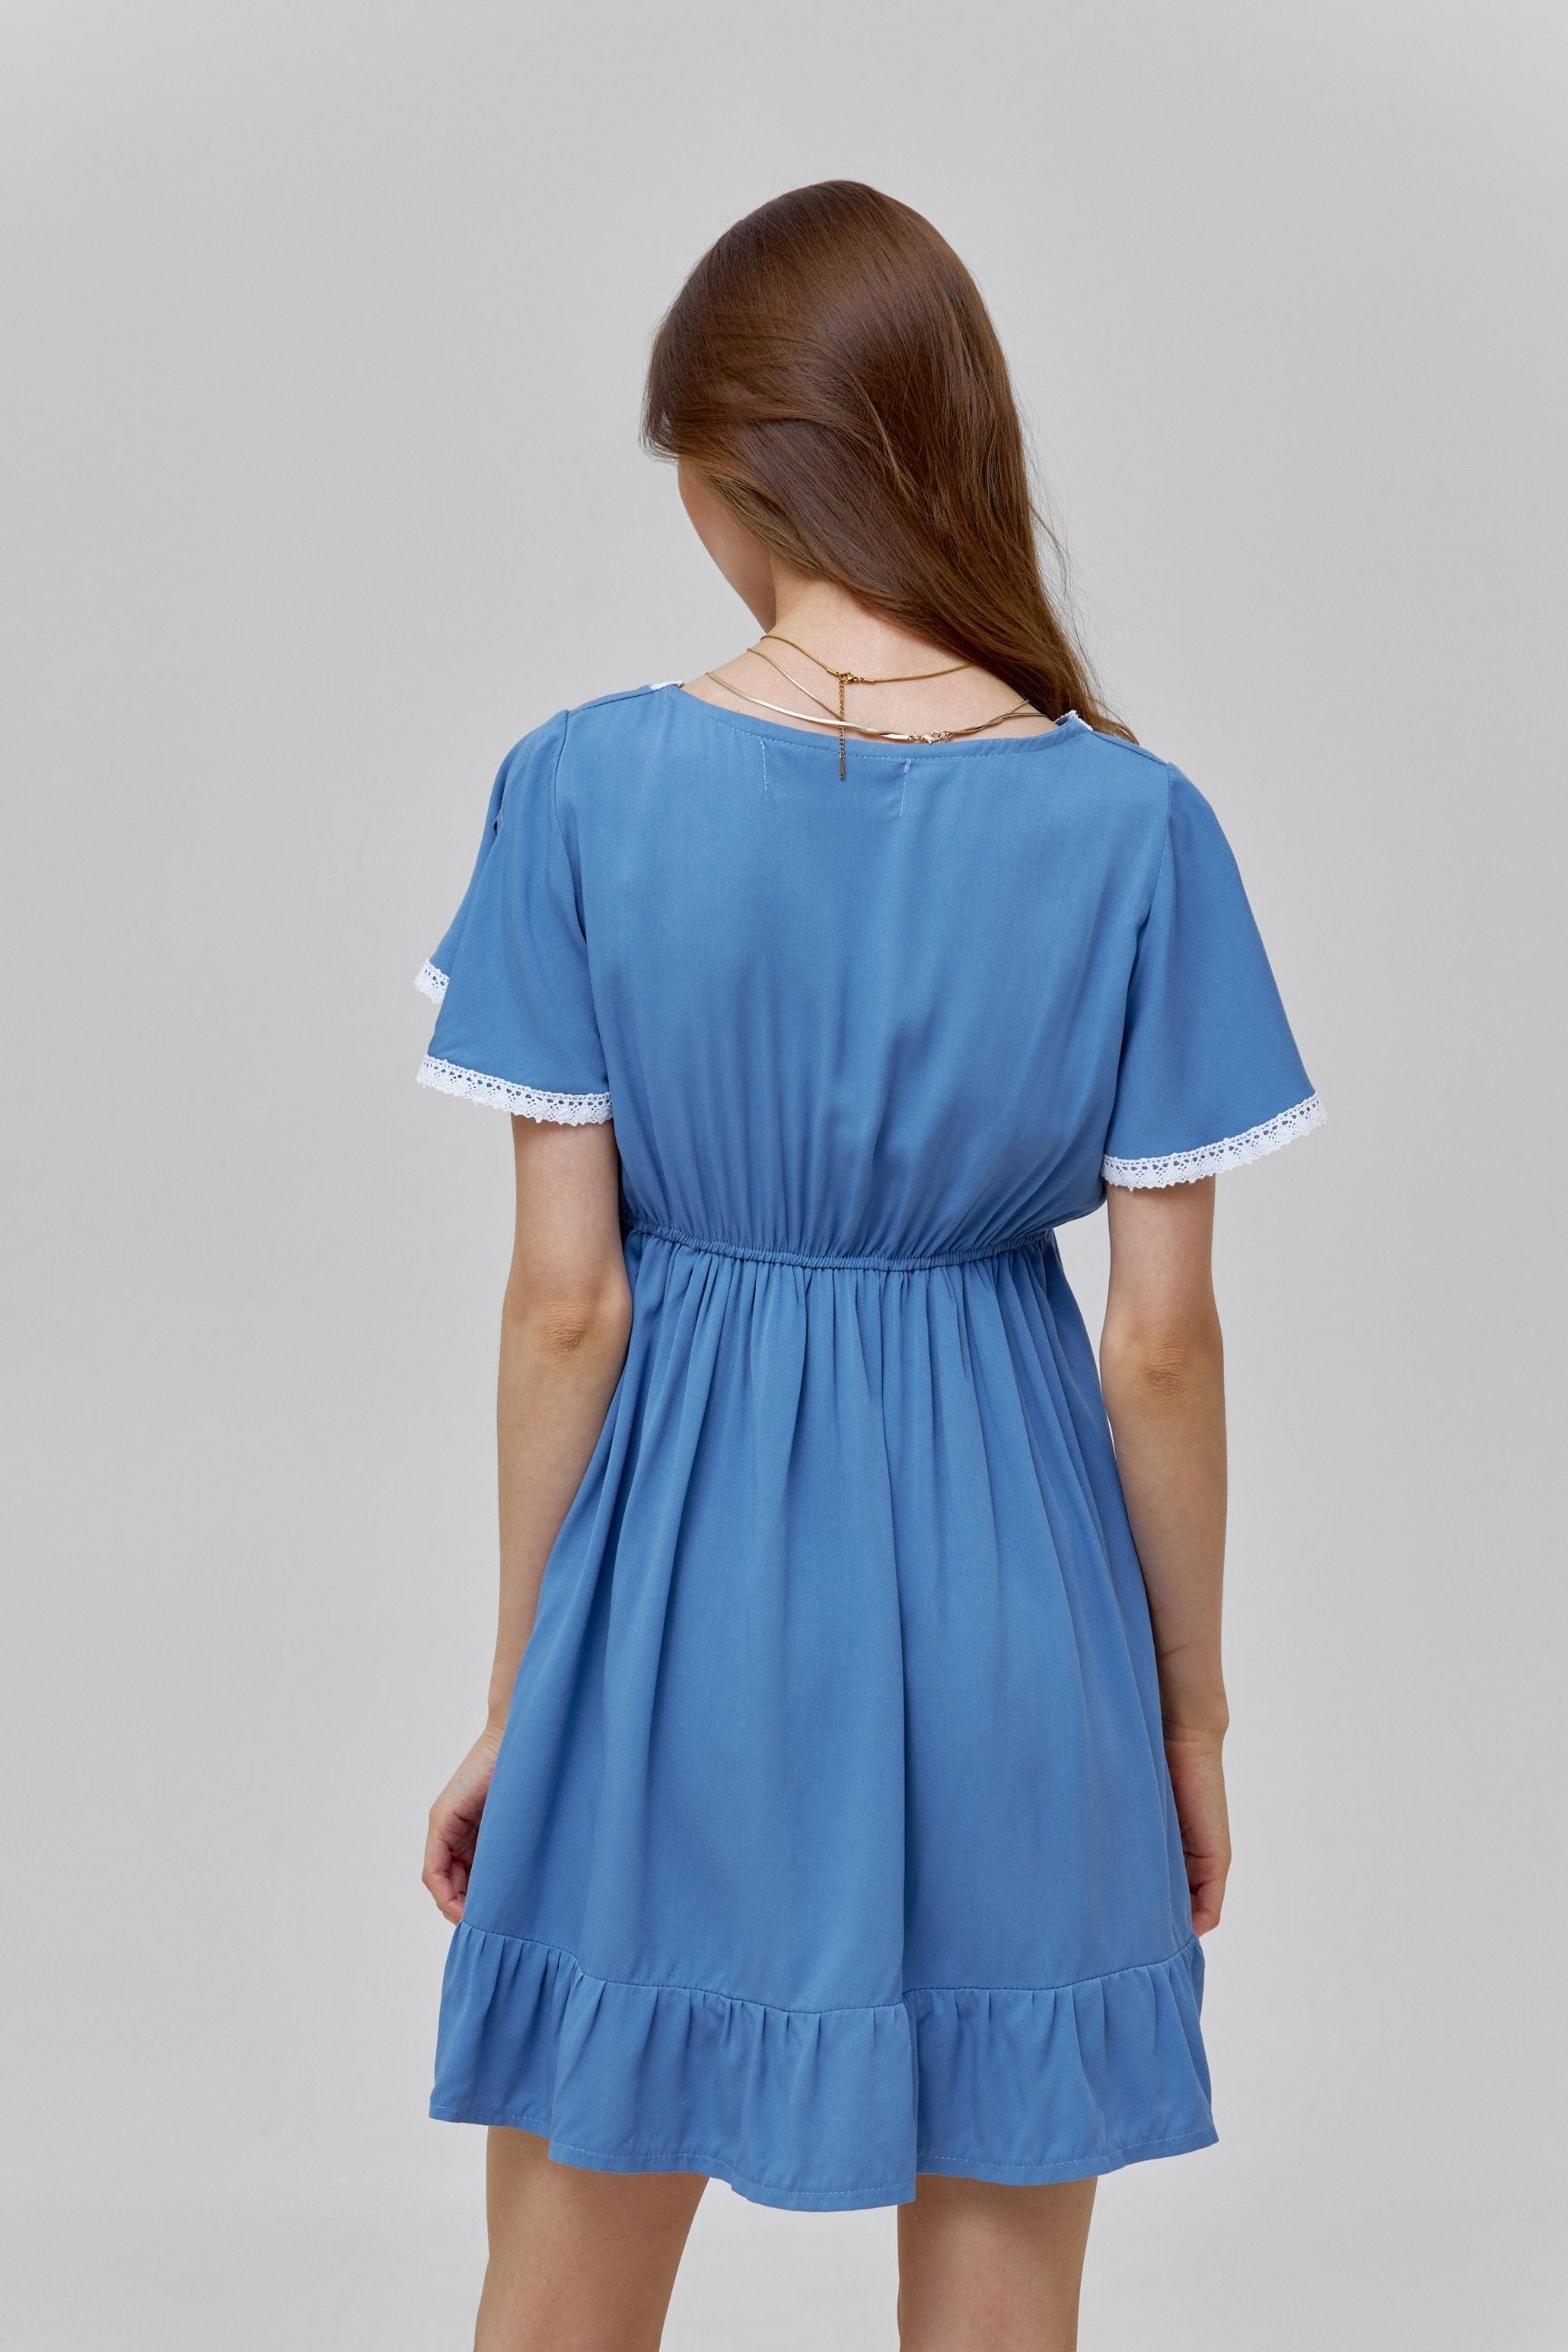 Casual Blue Dress